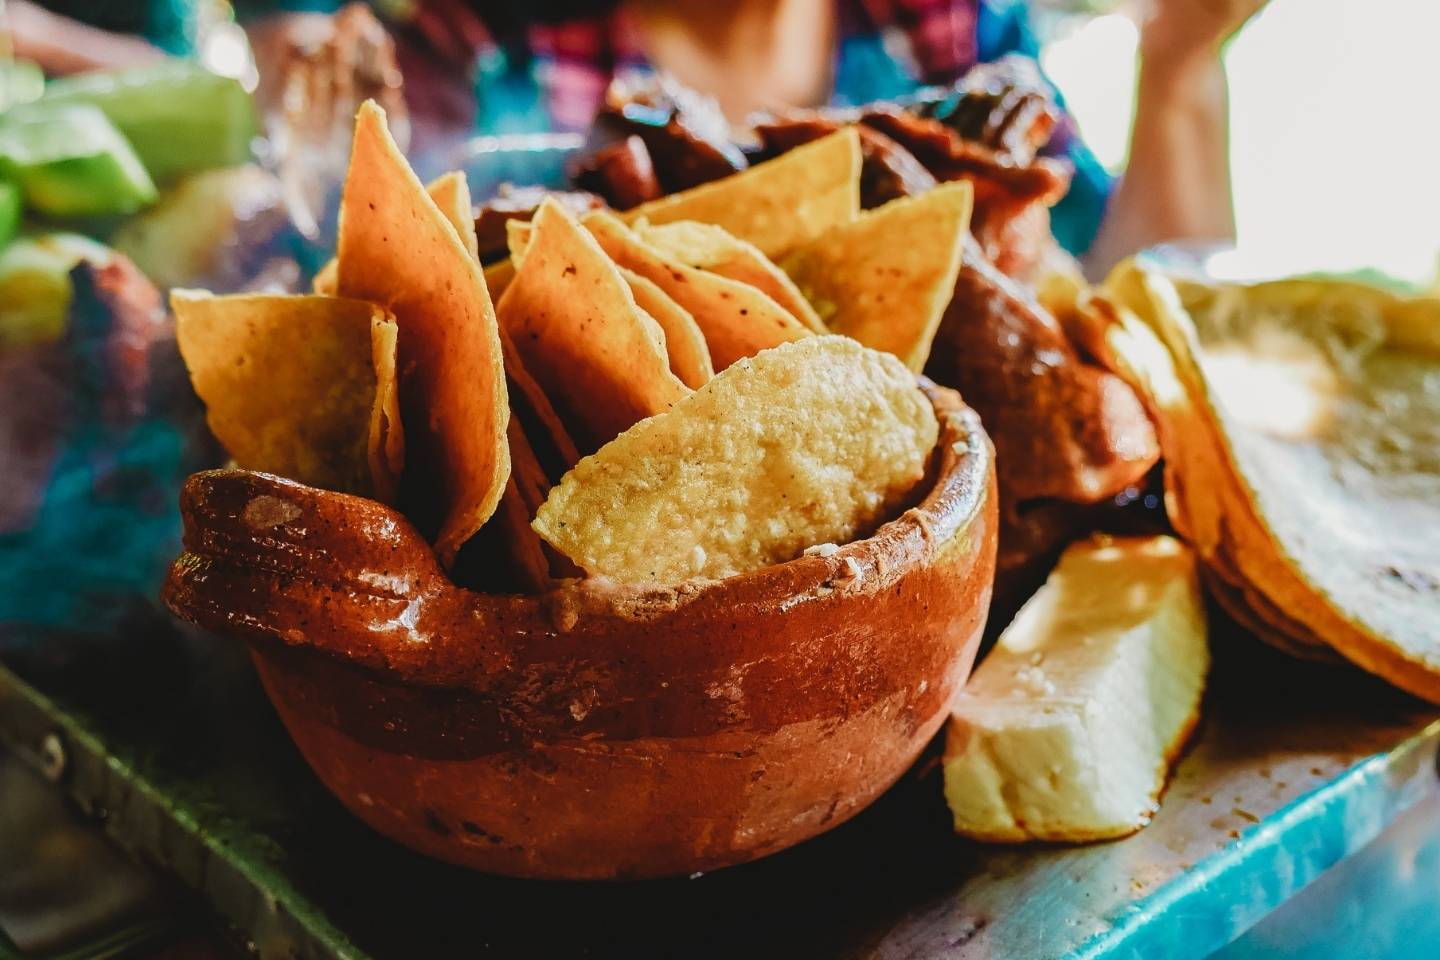 plato de comida mexicana